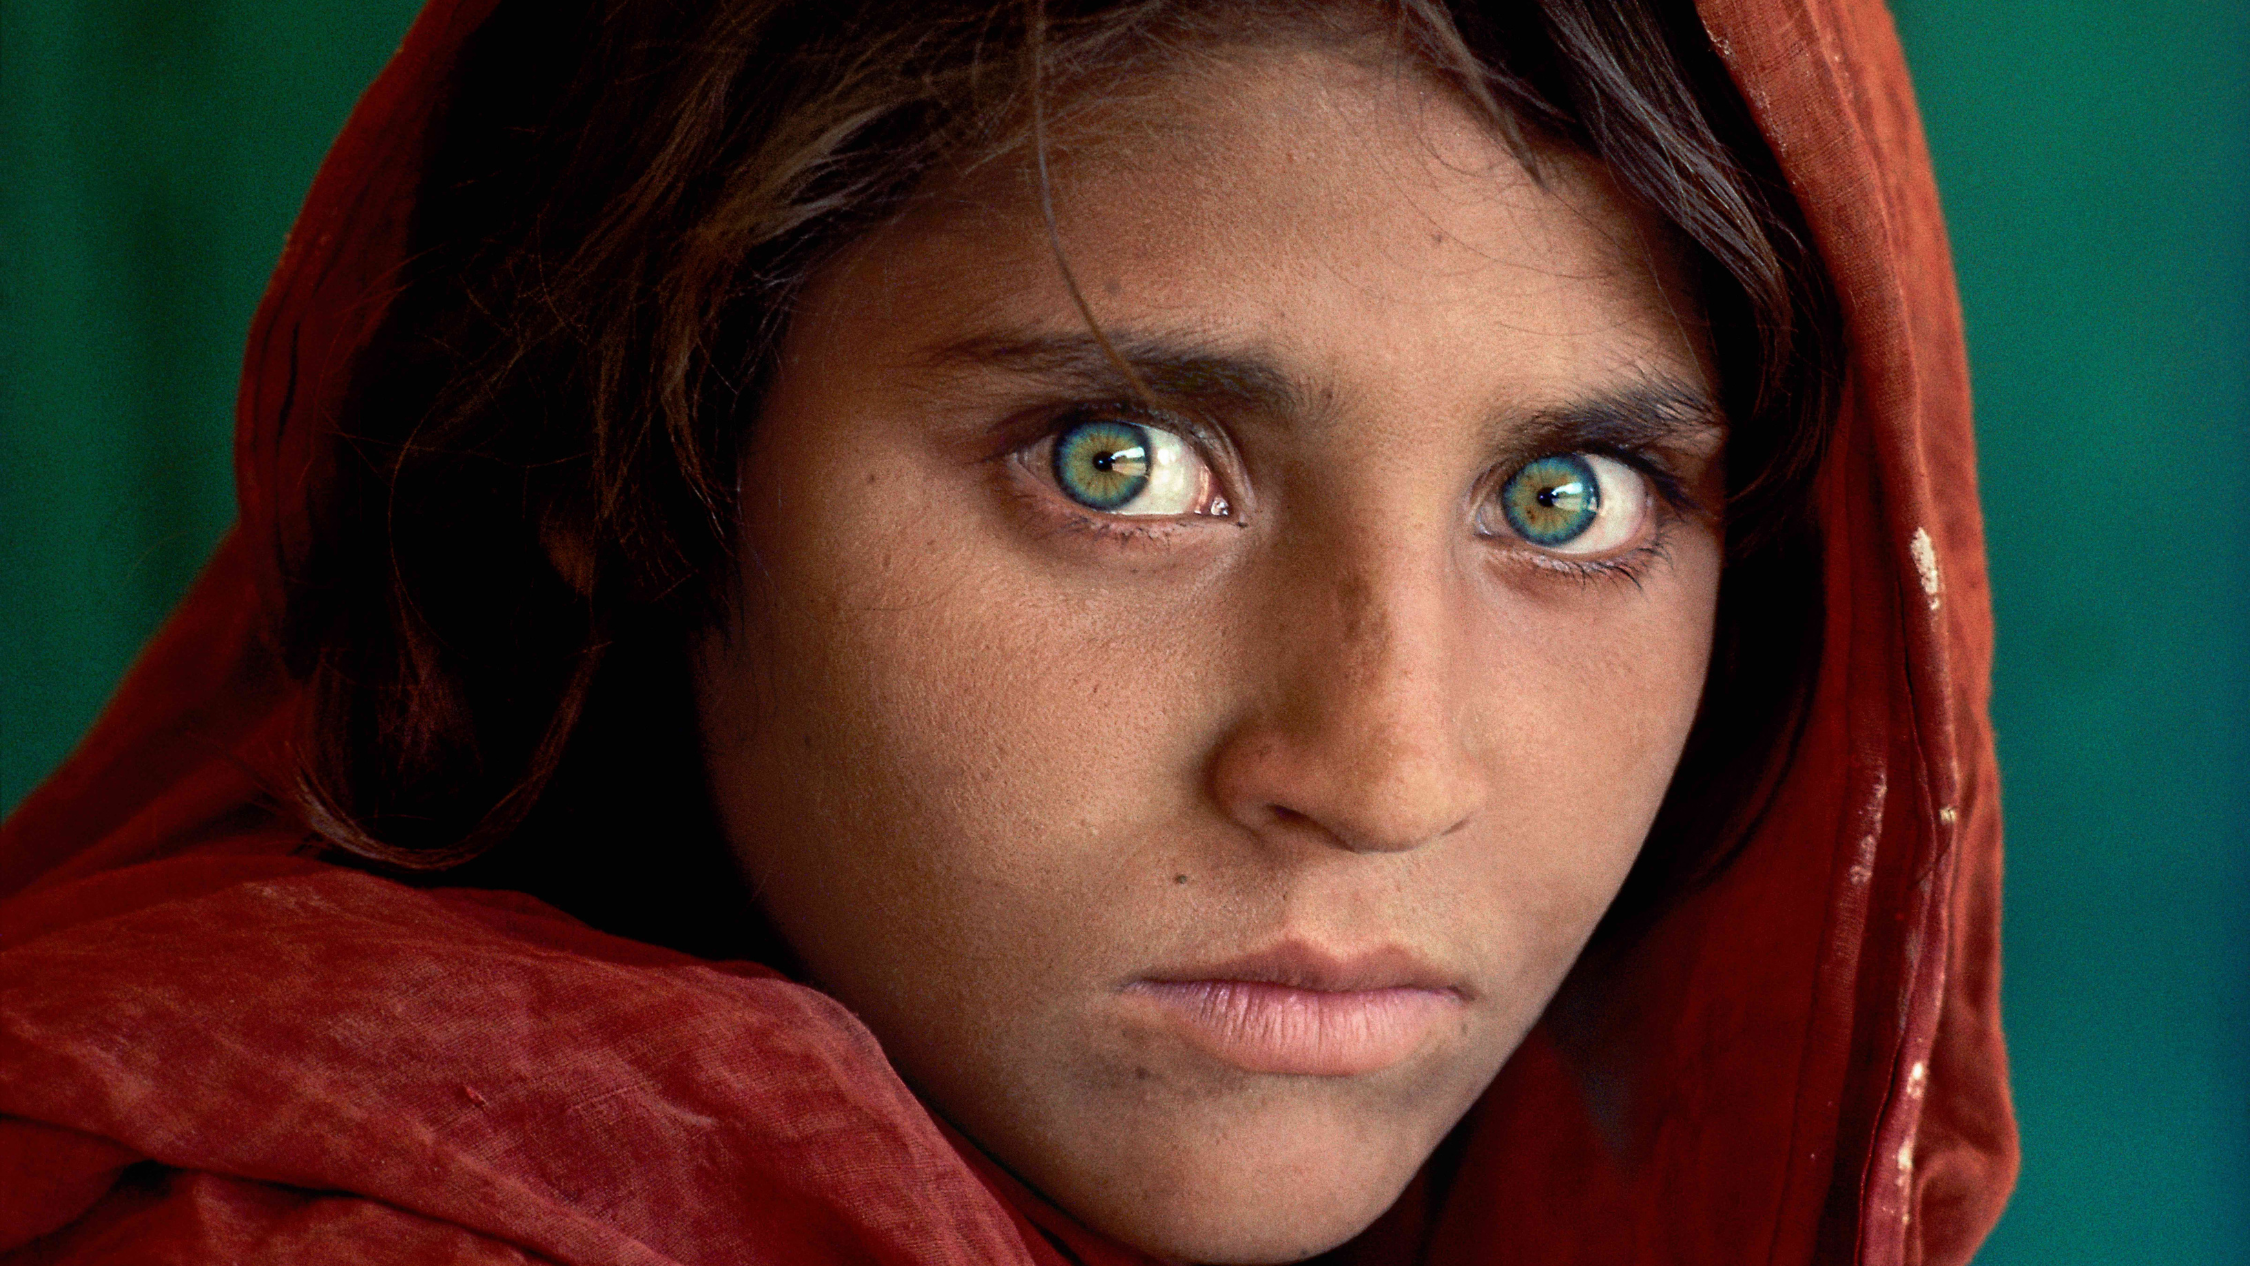 Steve McCurry beats Google's doodle, photography, Agenda